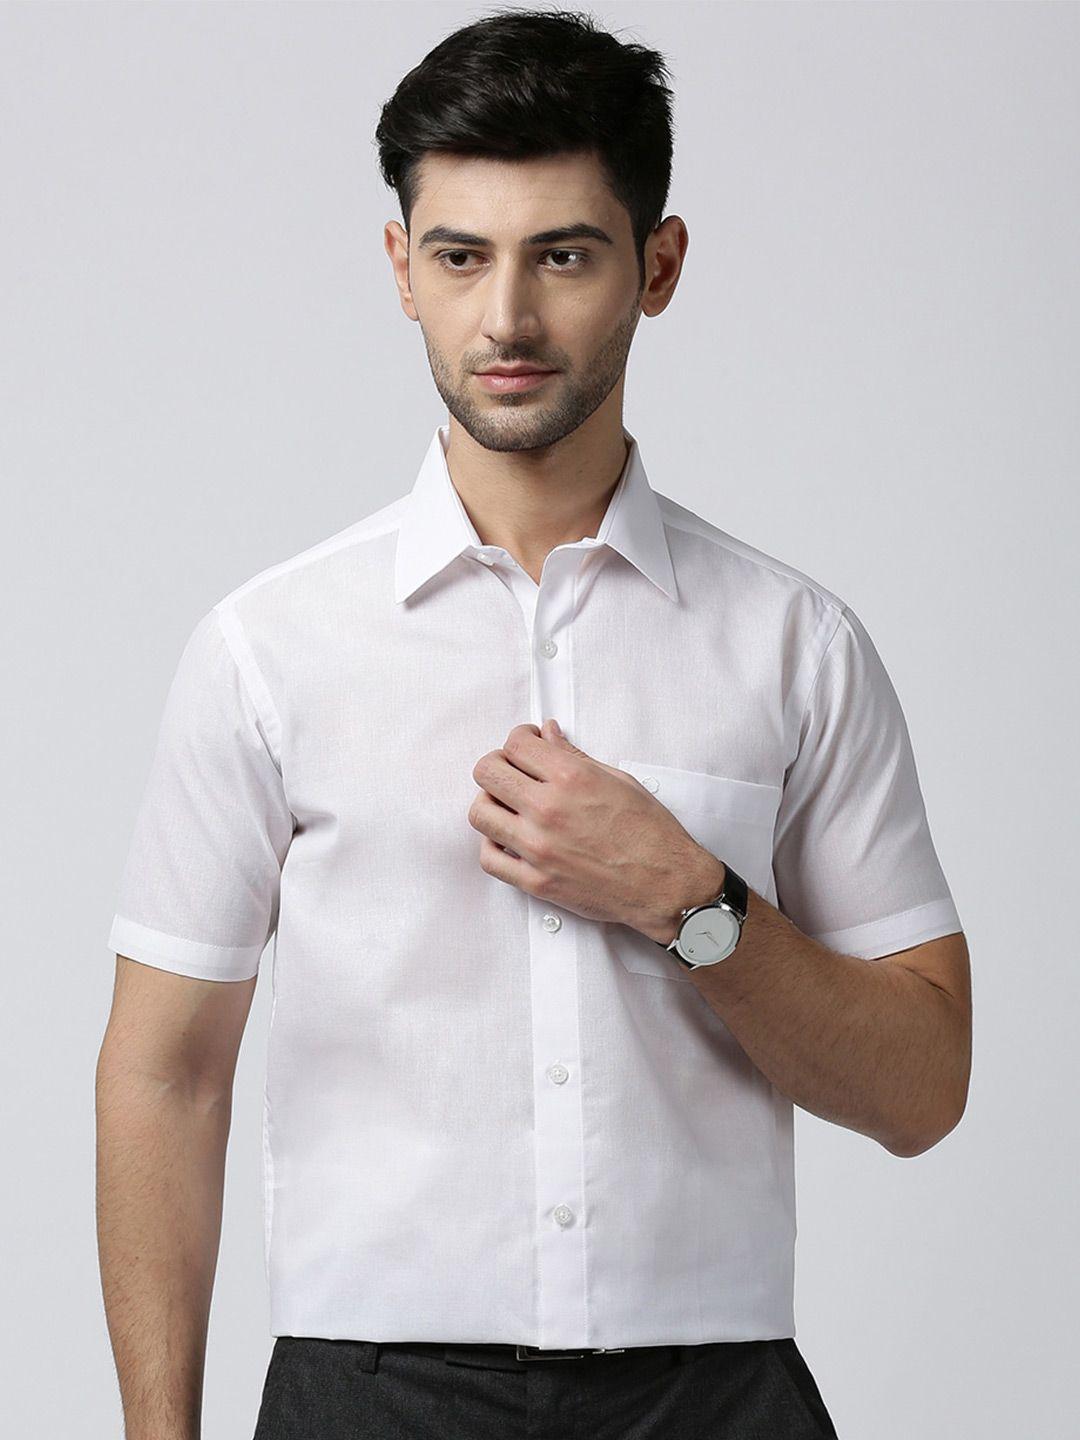 jansons men formal cotton shirt